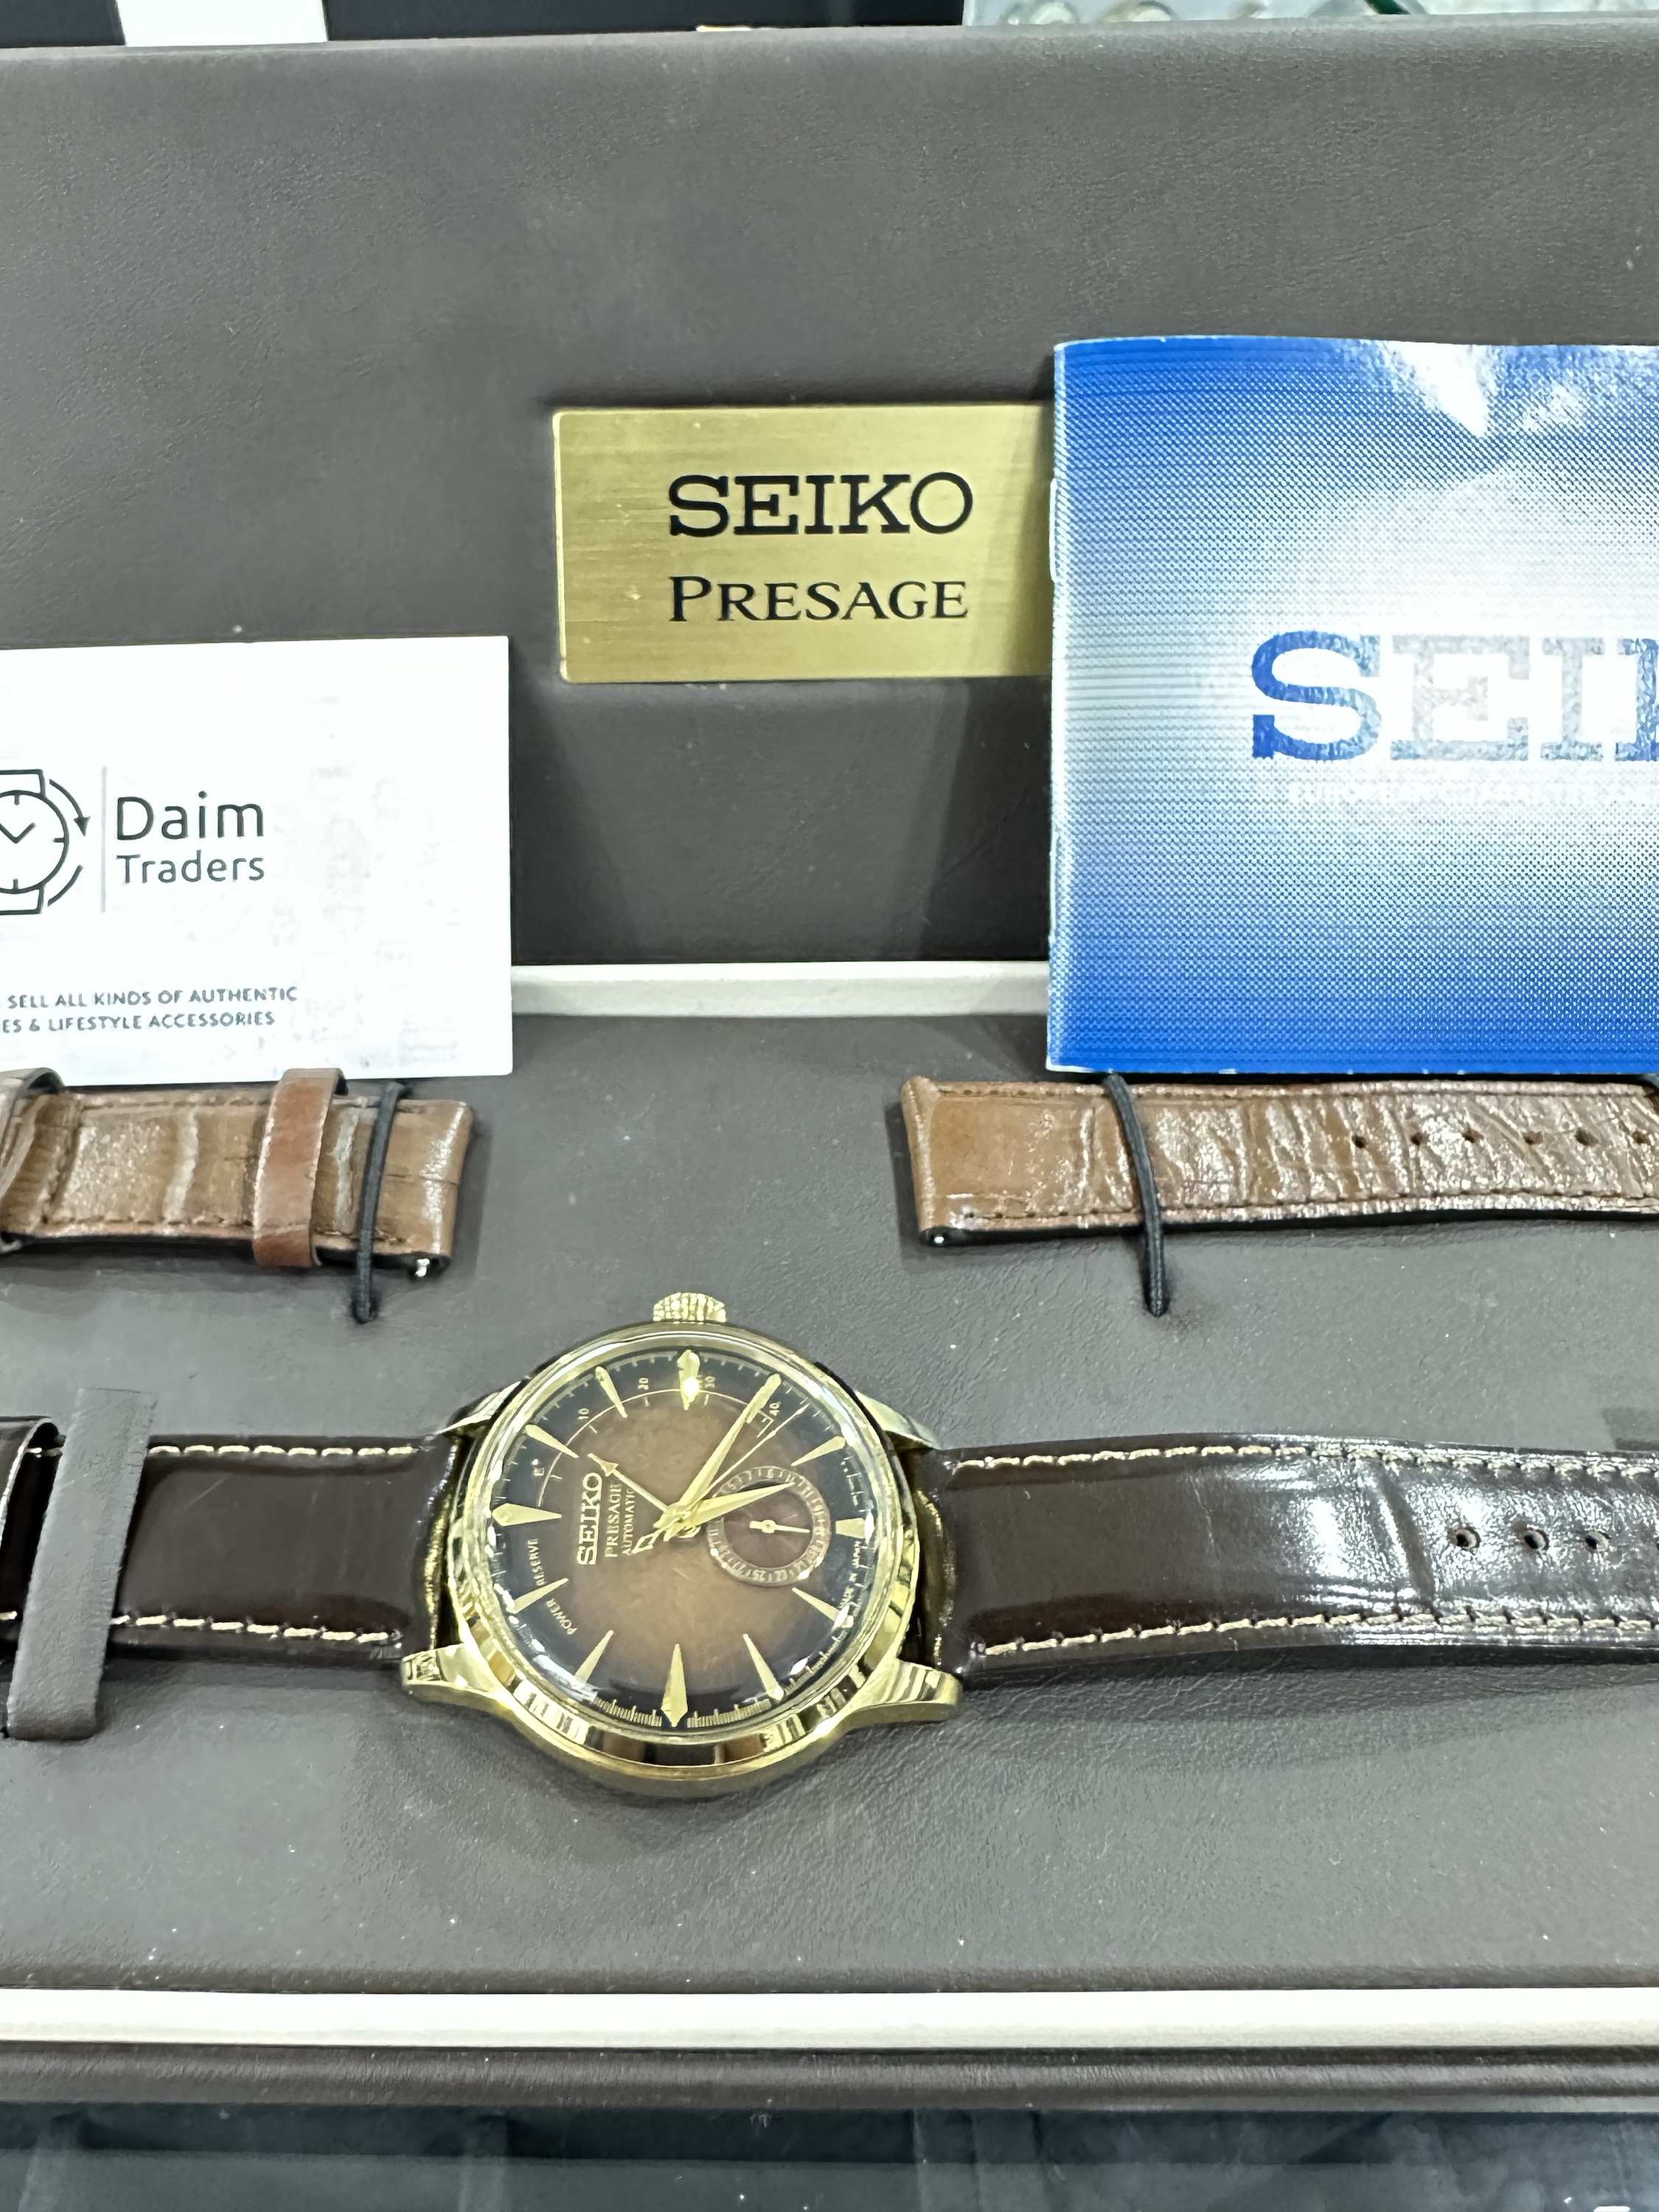 SEIKO Presage SSA392 Limited Edition | Daim Traders